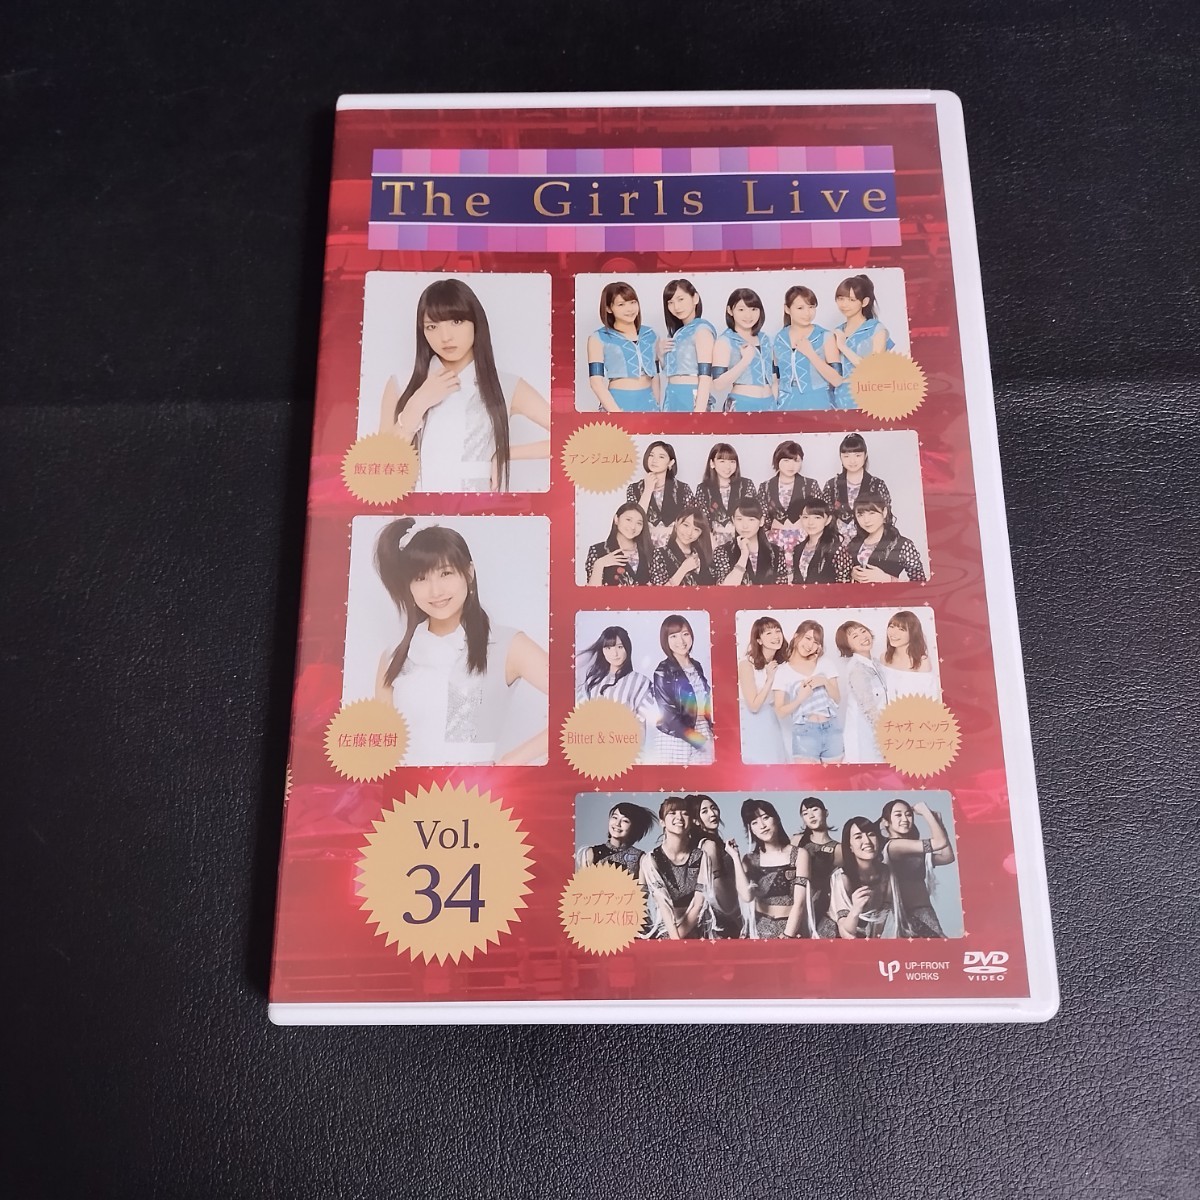 【The Girls Live】 Vol.34 邦楽DVD Juice=Juice アンジュルム 他 2017年_画像1